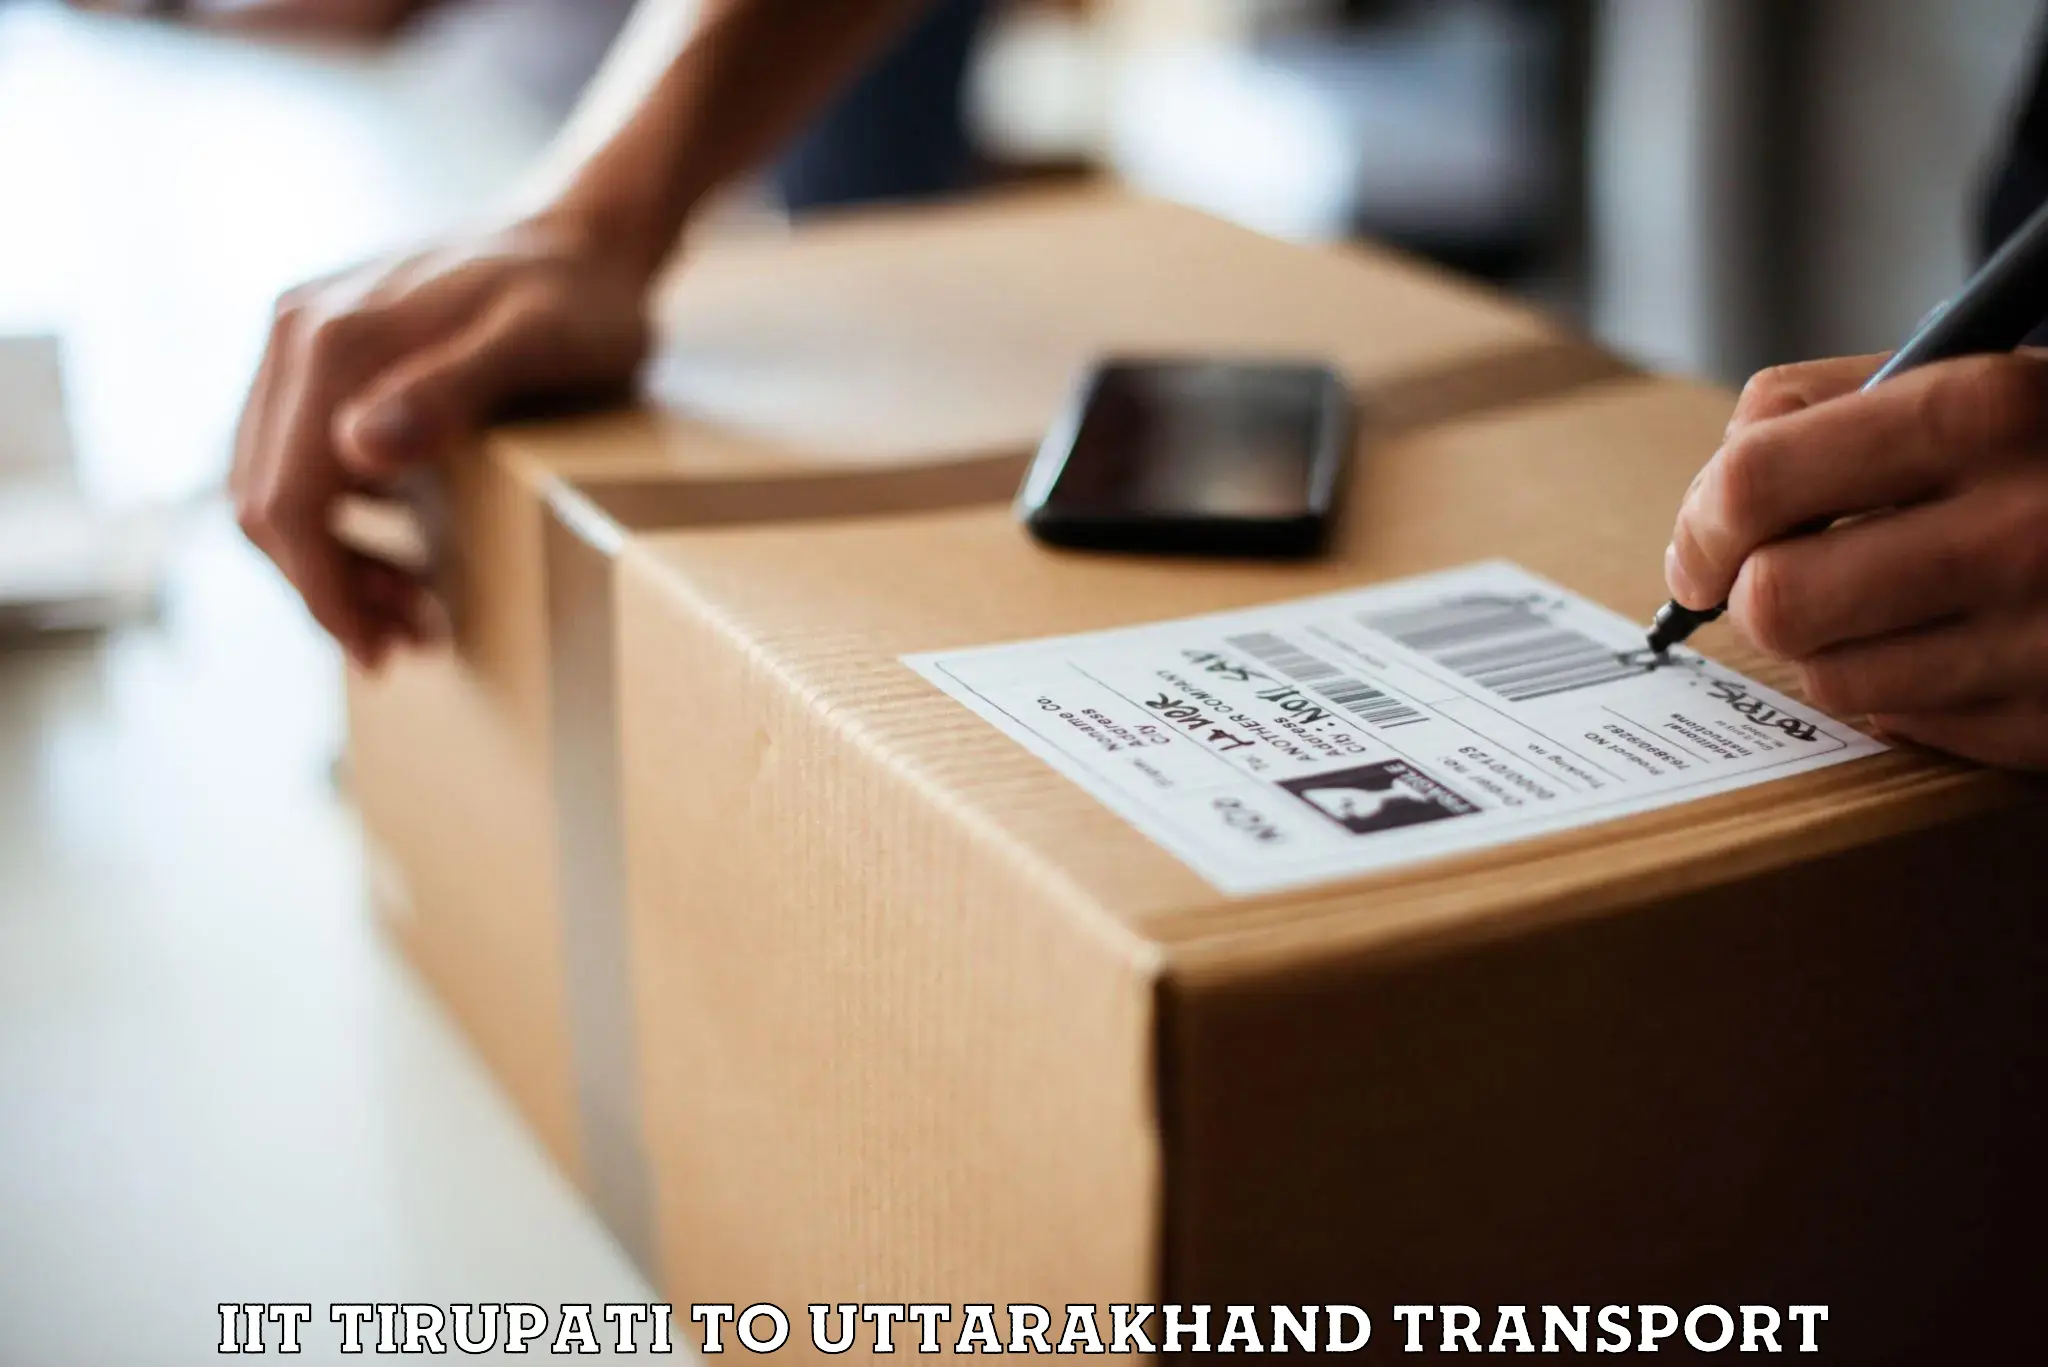 Delivery service IIT Tirupati to Uttarakhand